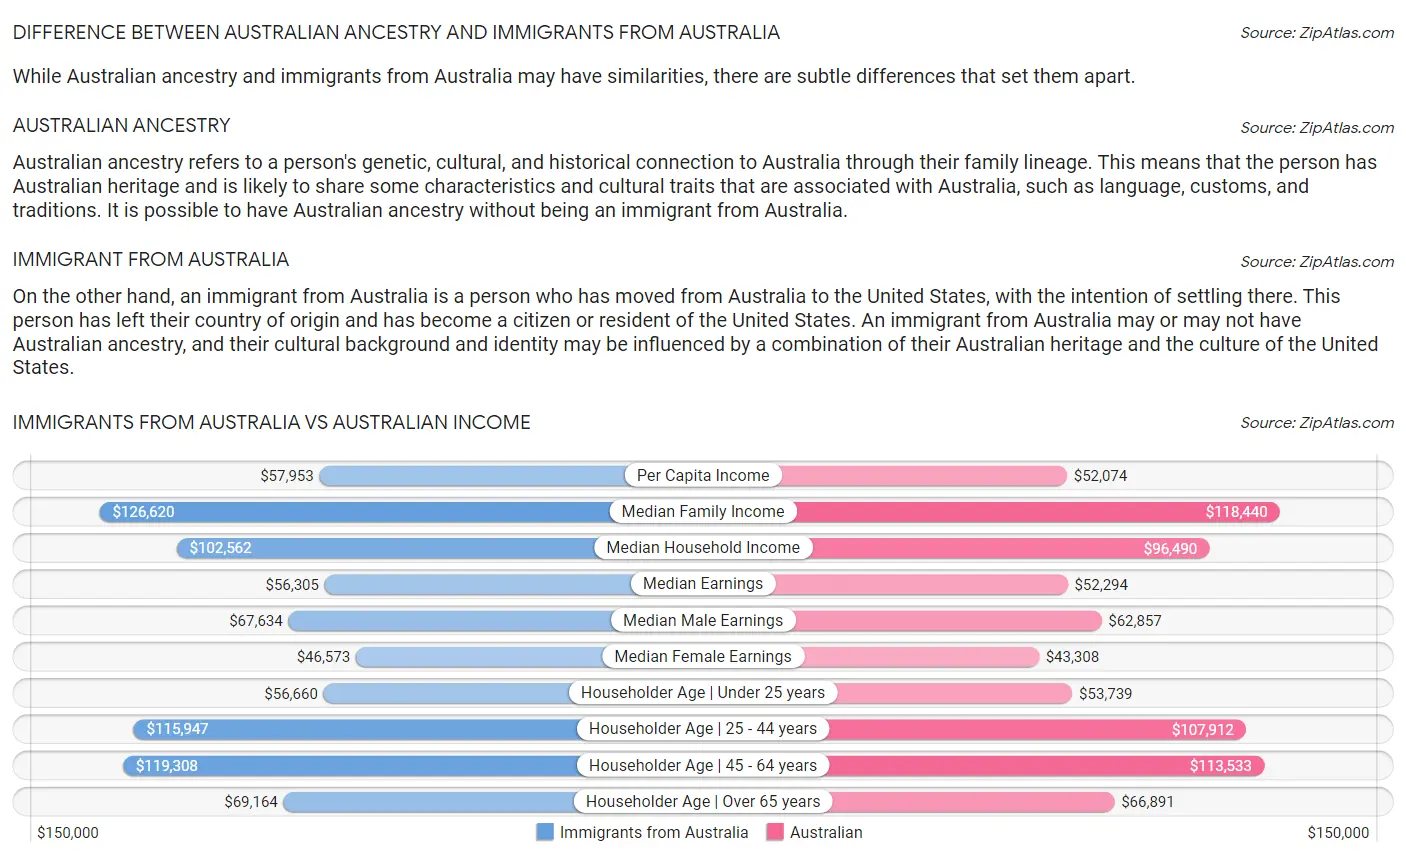 Immigrants from Australia vs Australian Income